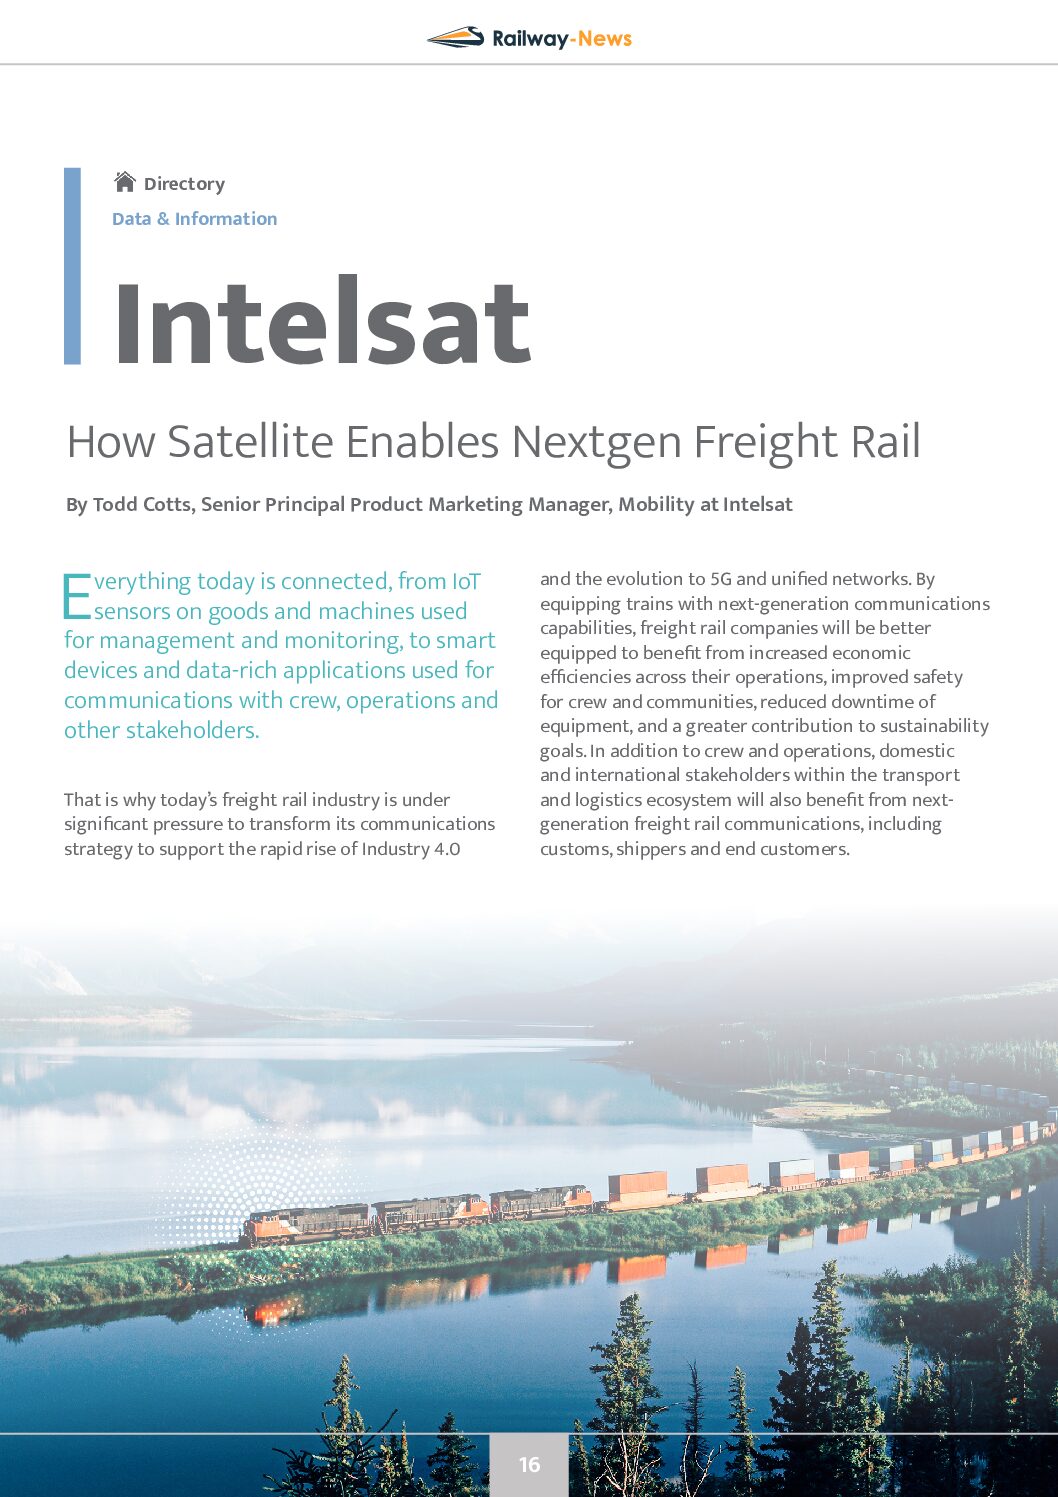 How Satellite Enables Nextgen Freight Rail